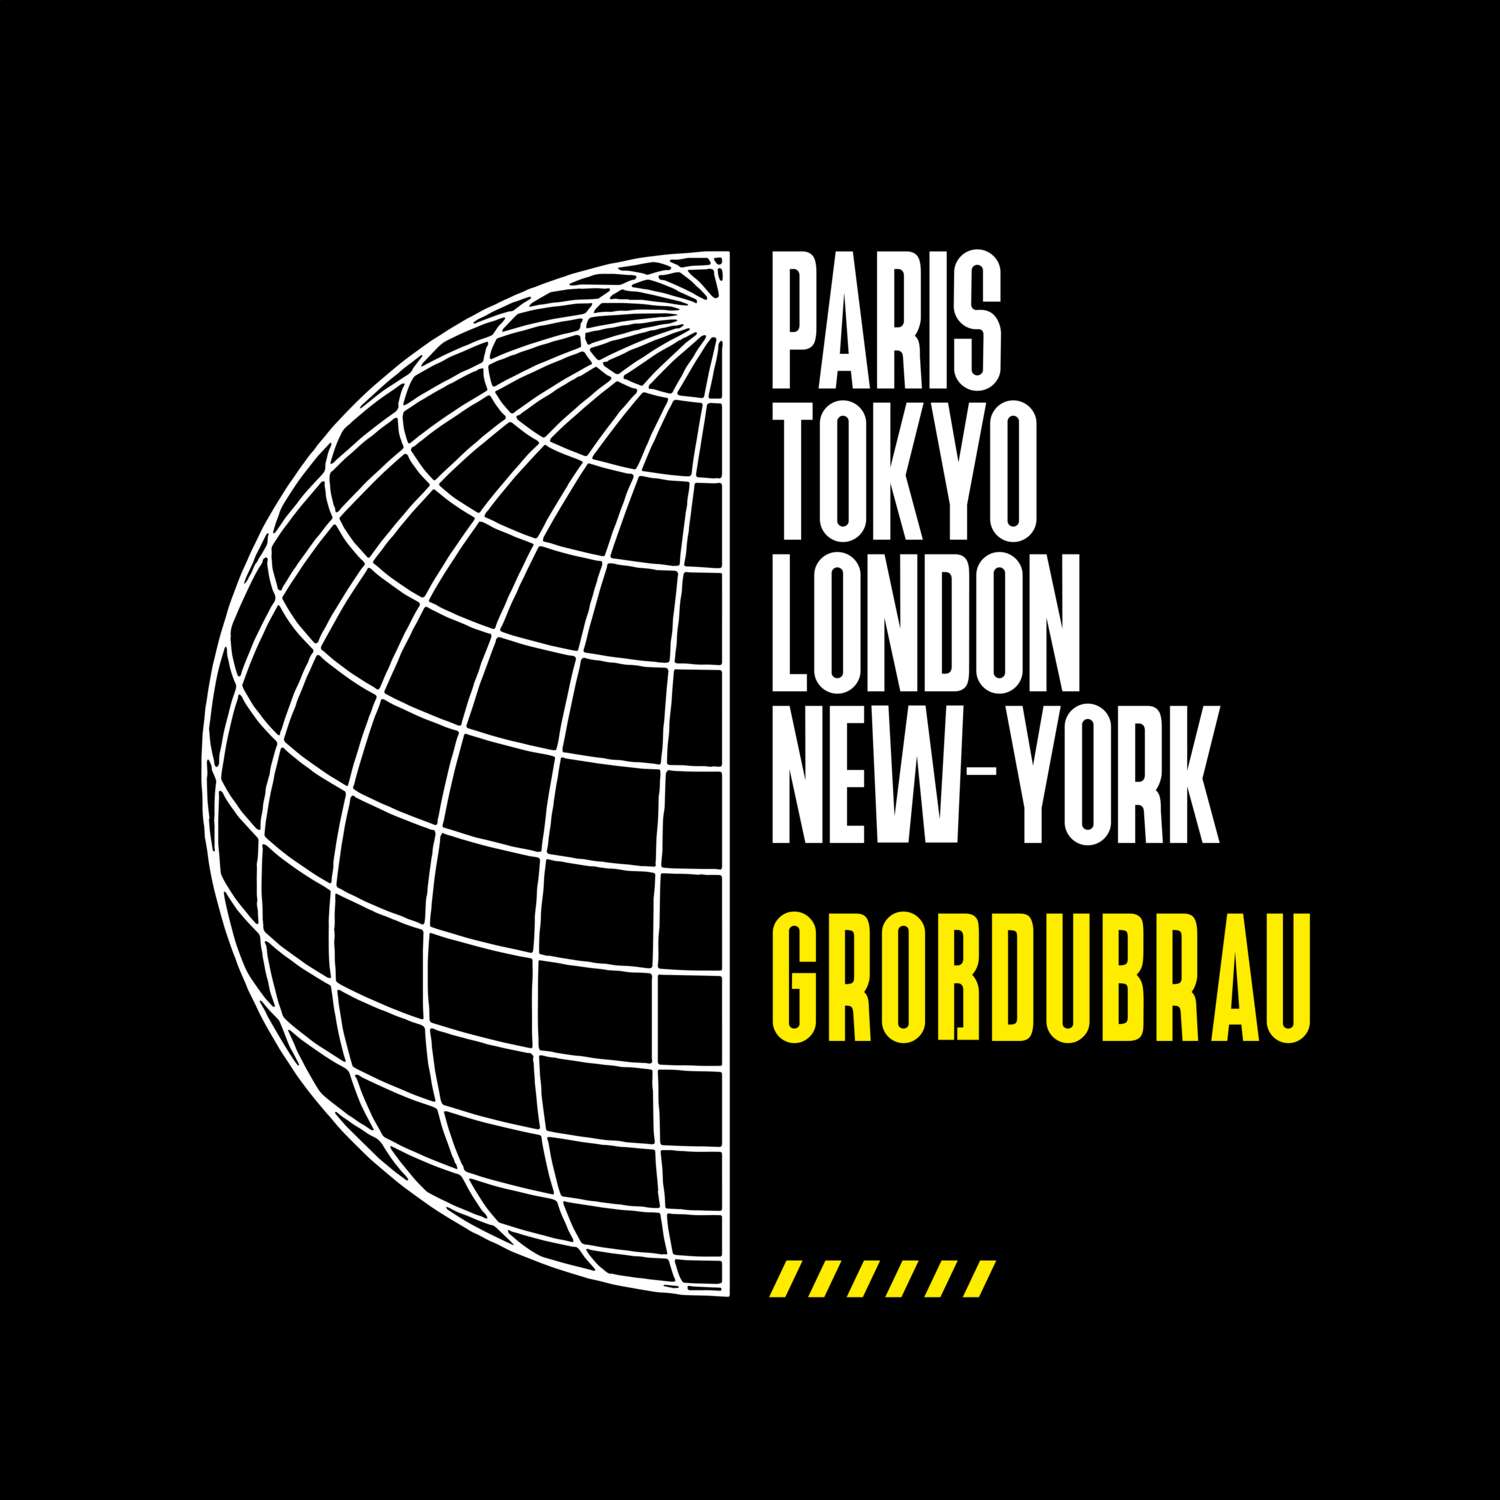 Großdubrau T-Shirt »Paris Tokyo London«